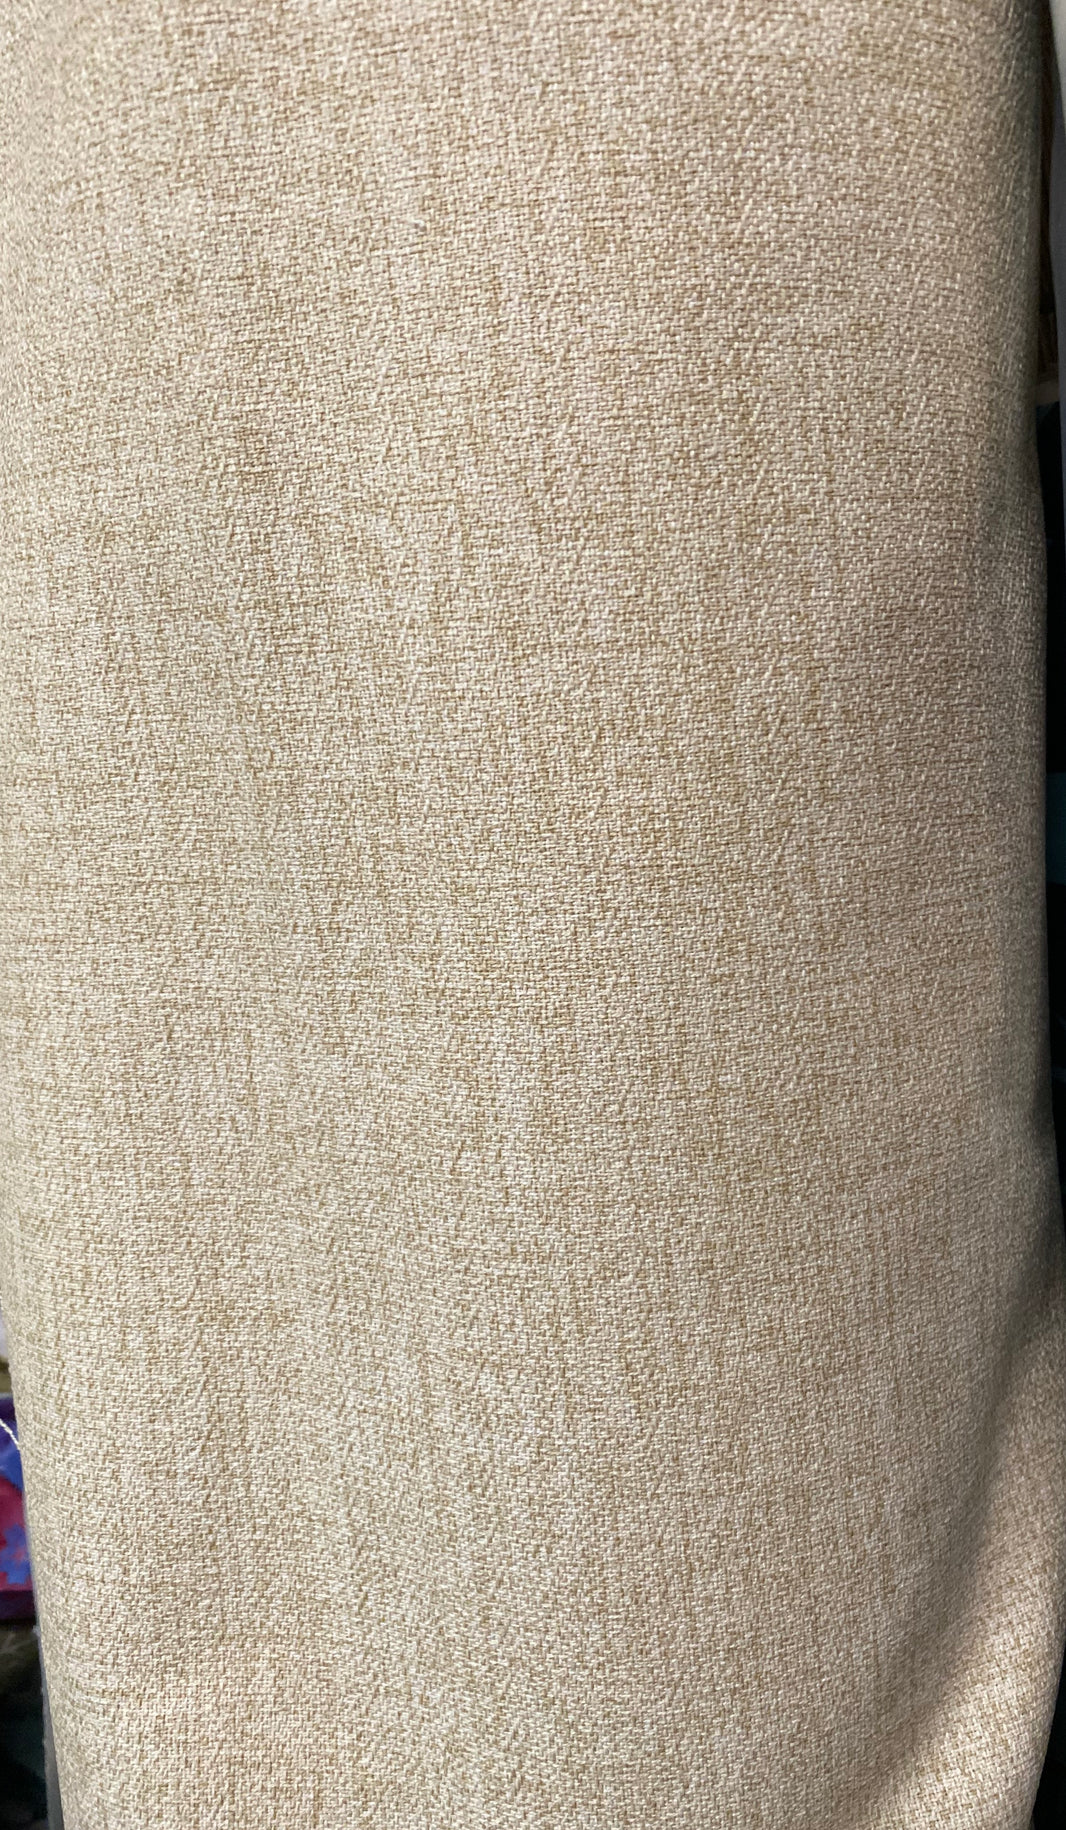 Barkcloth Upholstery Fabric – Its So Maui - Hawaiian Fabric